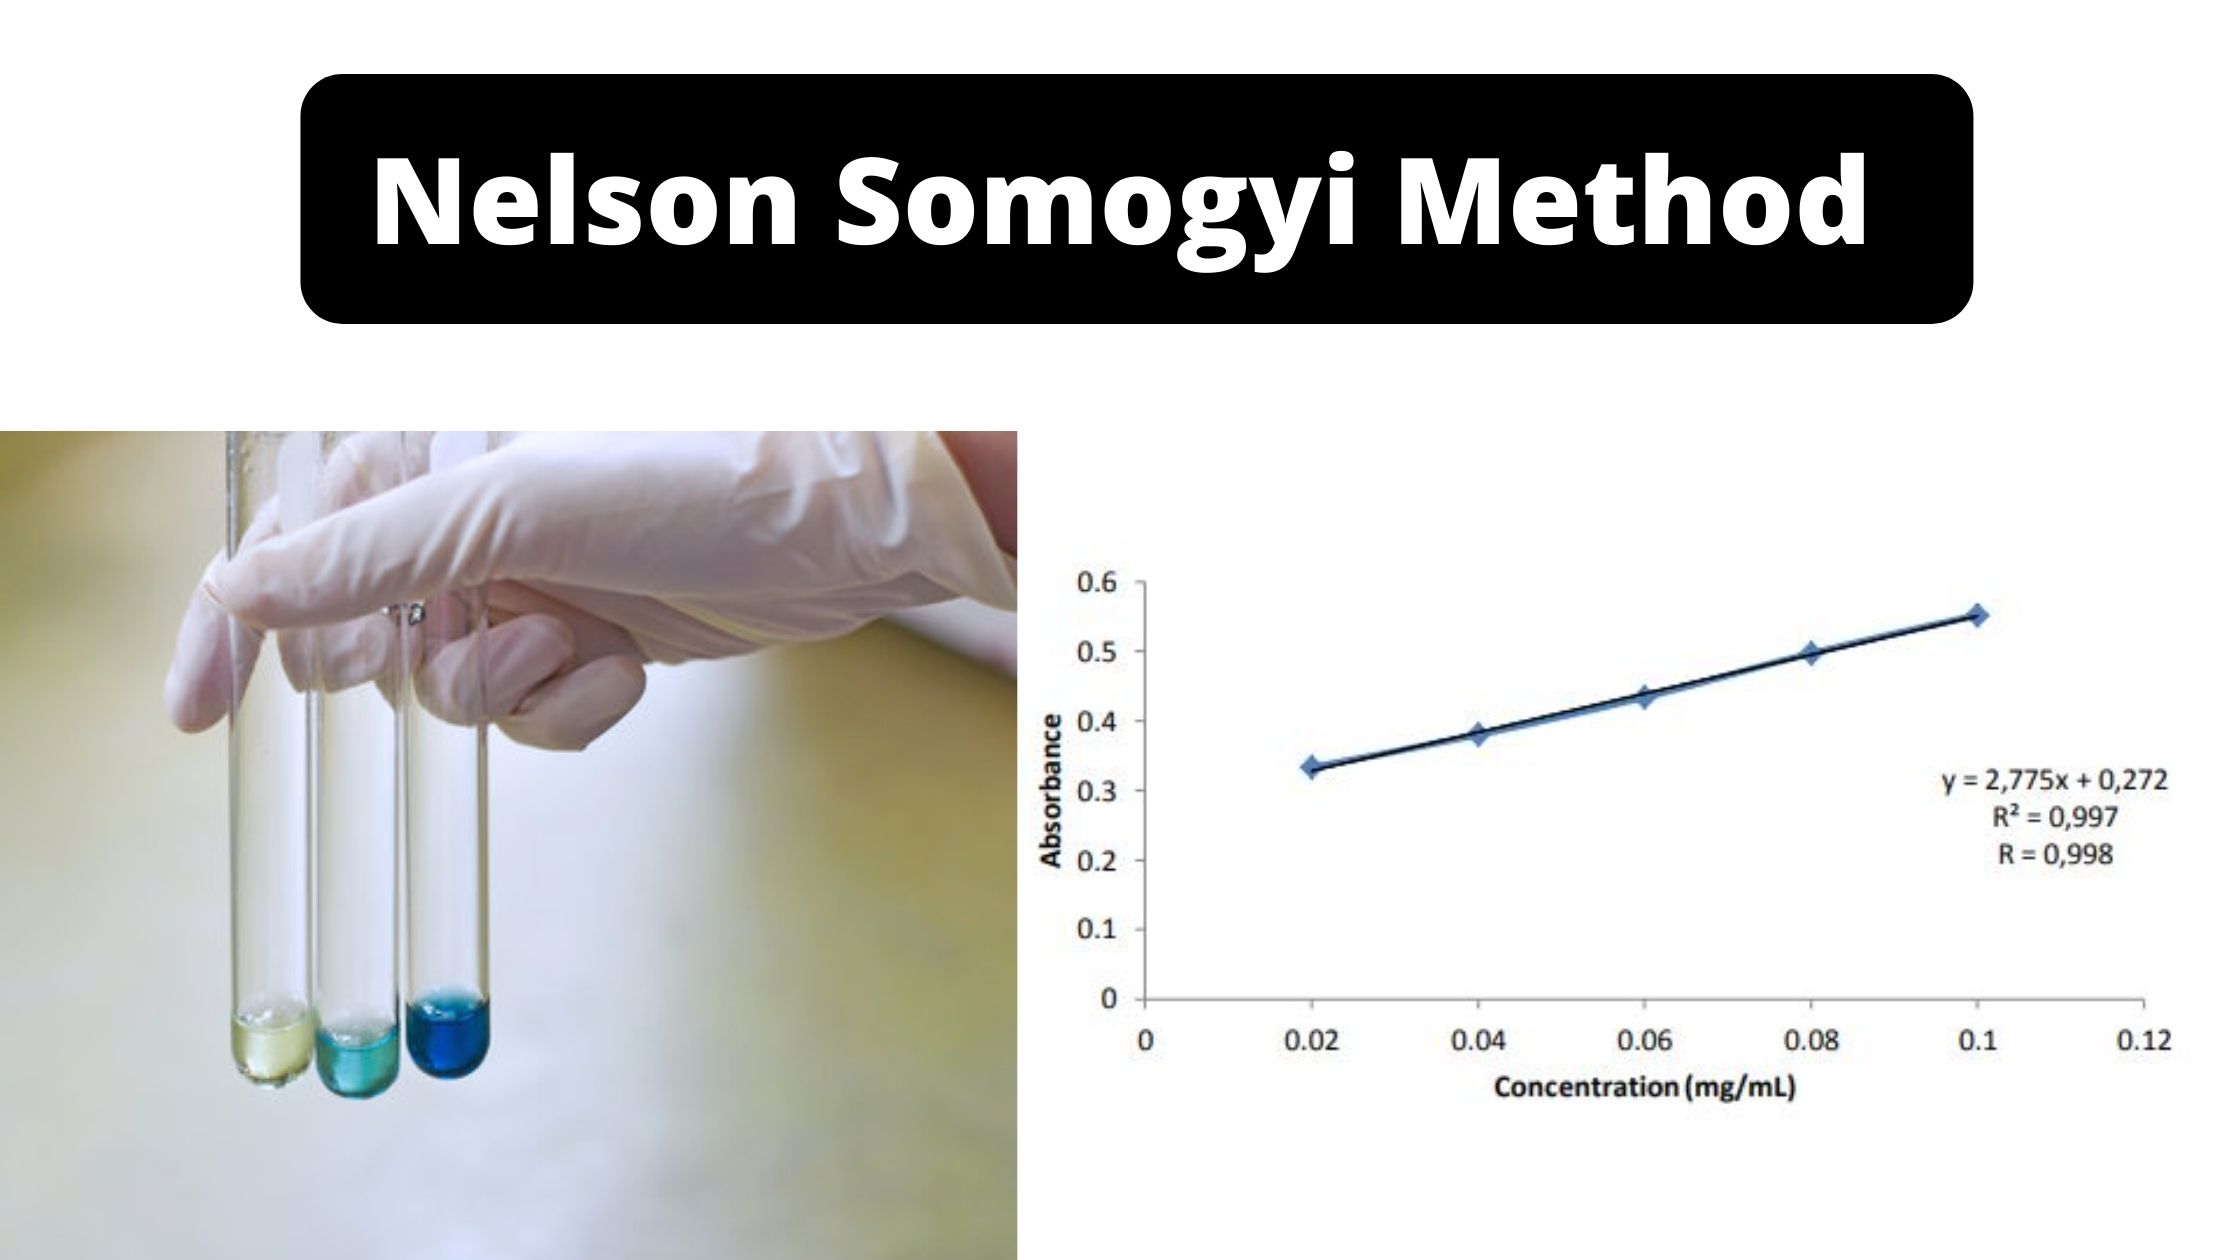 Nelson Somogyi Method for Determination of reducing sugars